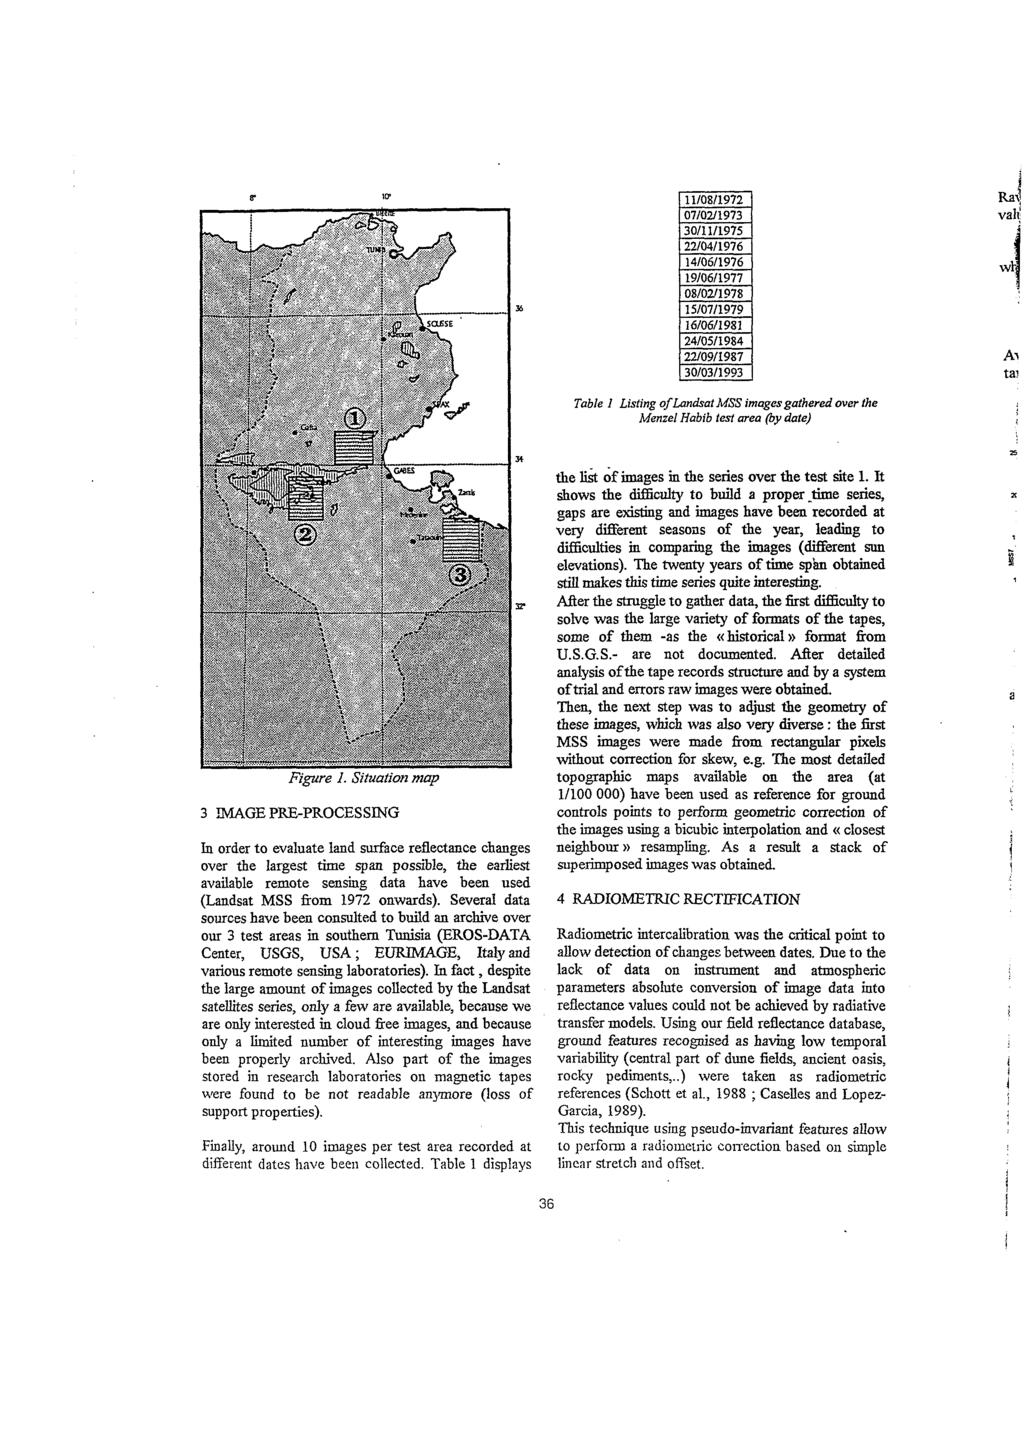 130/03/1993 1 Table I LiSring of Landsat MSS imagesgathered over the Menzel Habib test area (by date) Figure I.